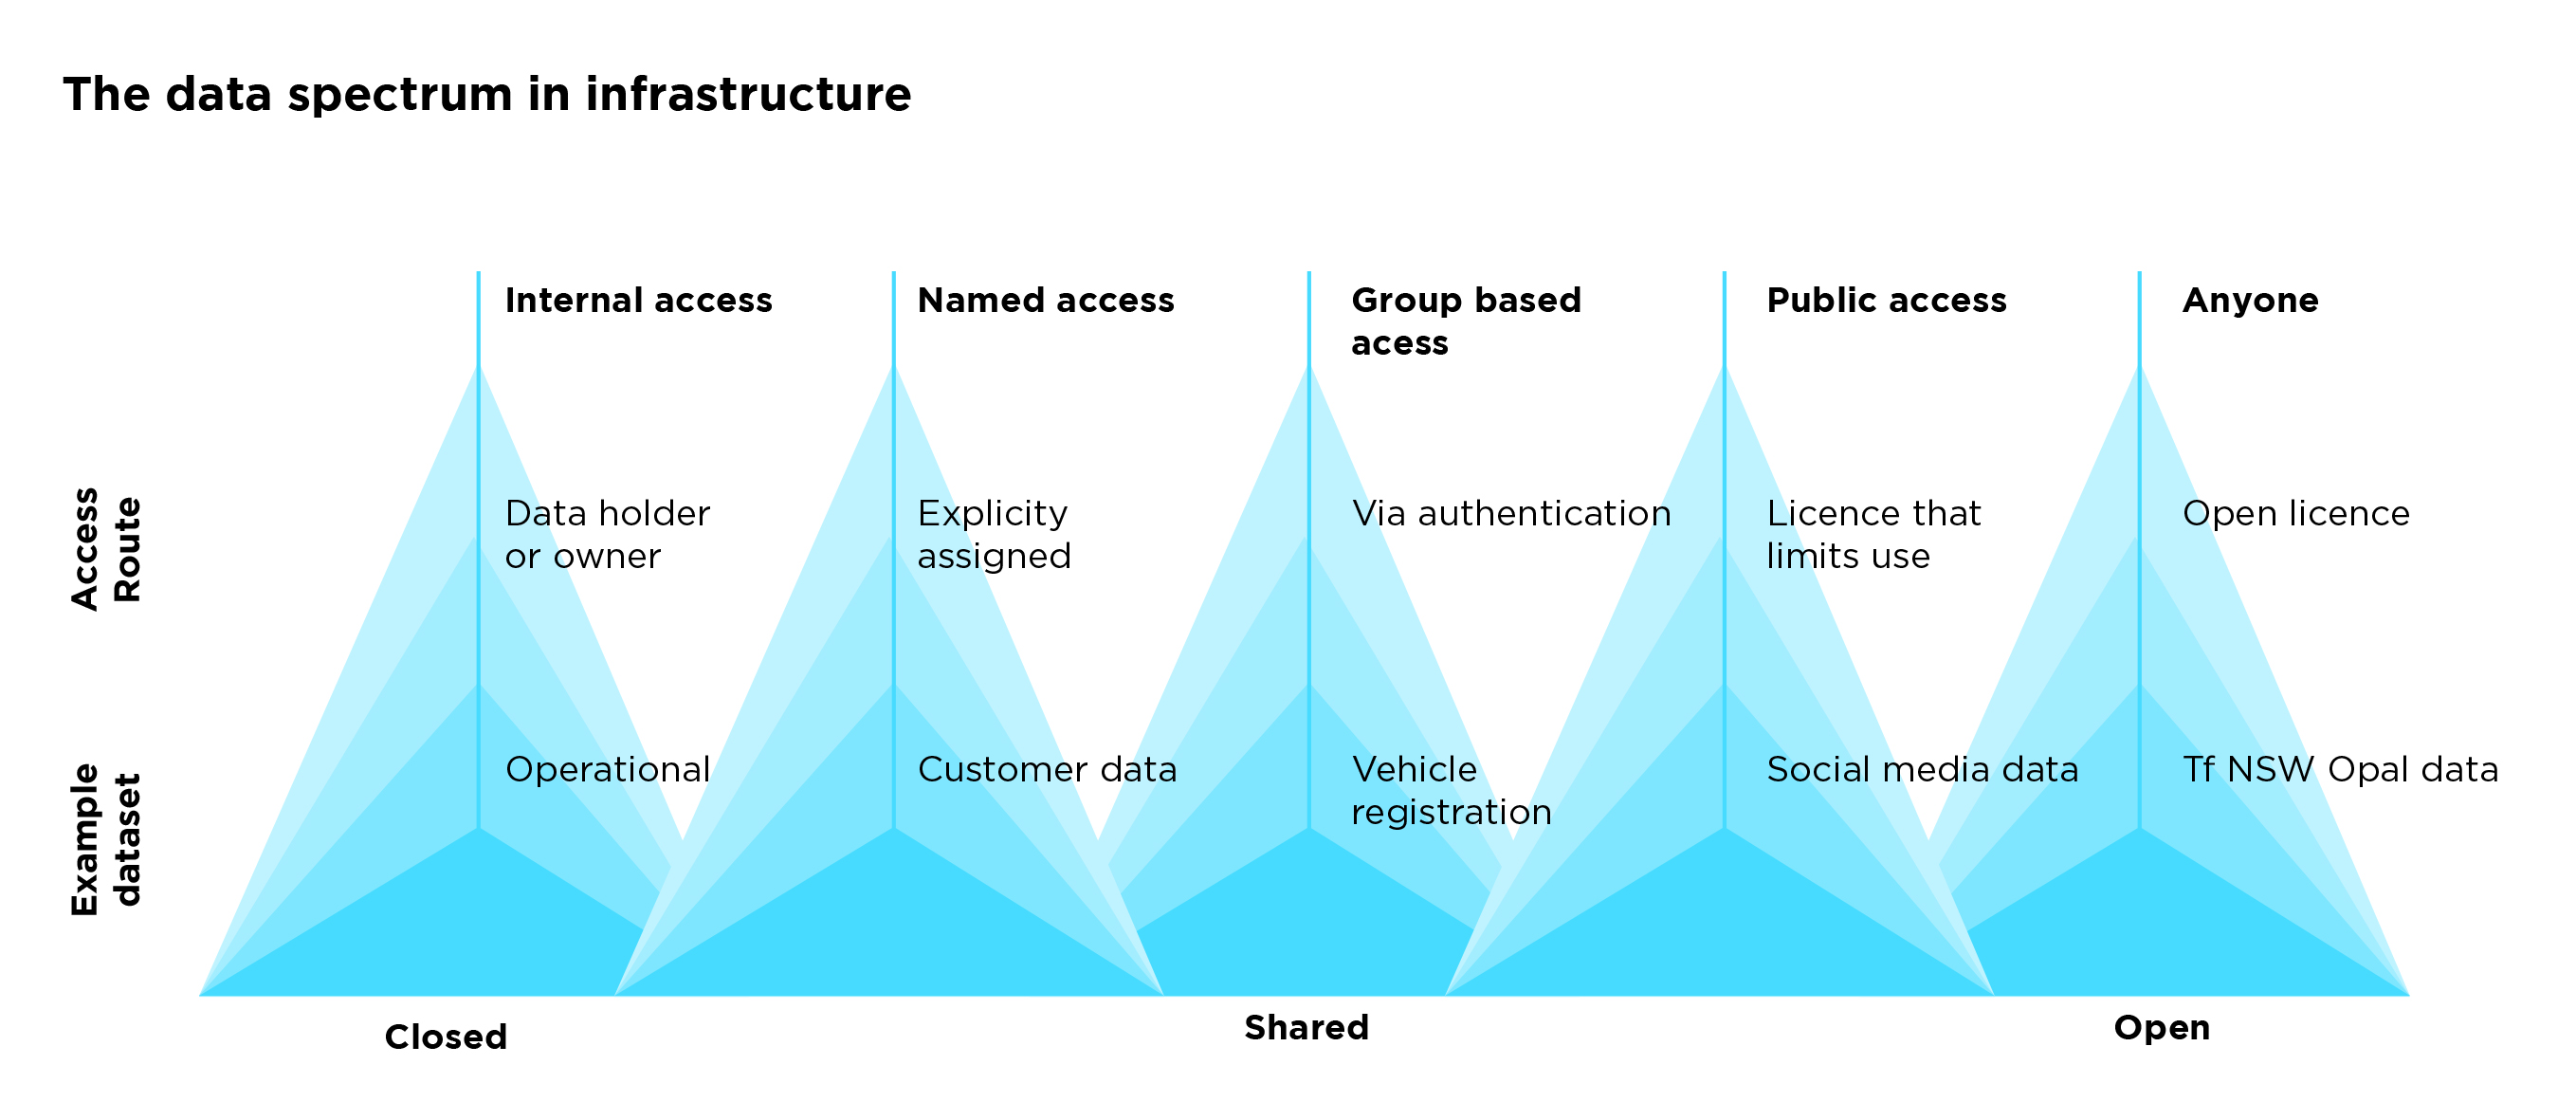 Figure 17: The data spectrum in infrastructure